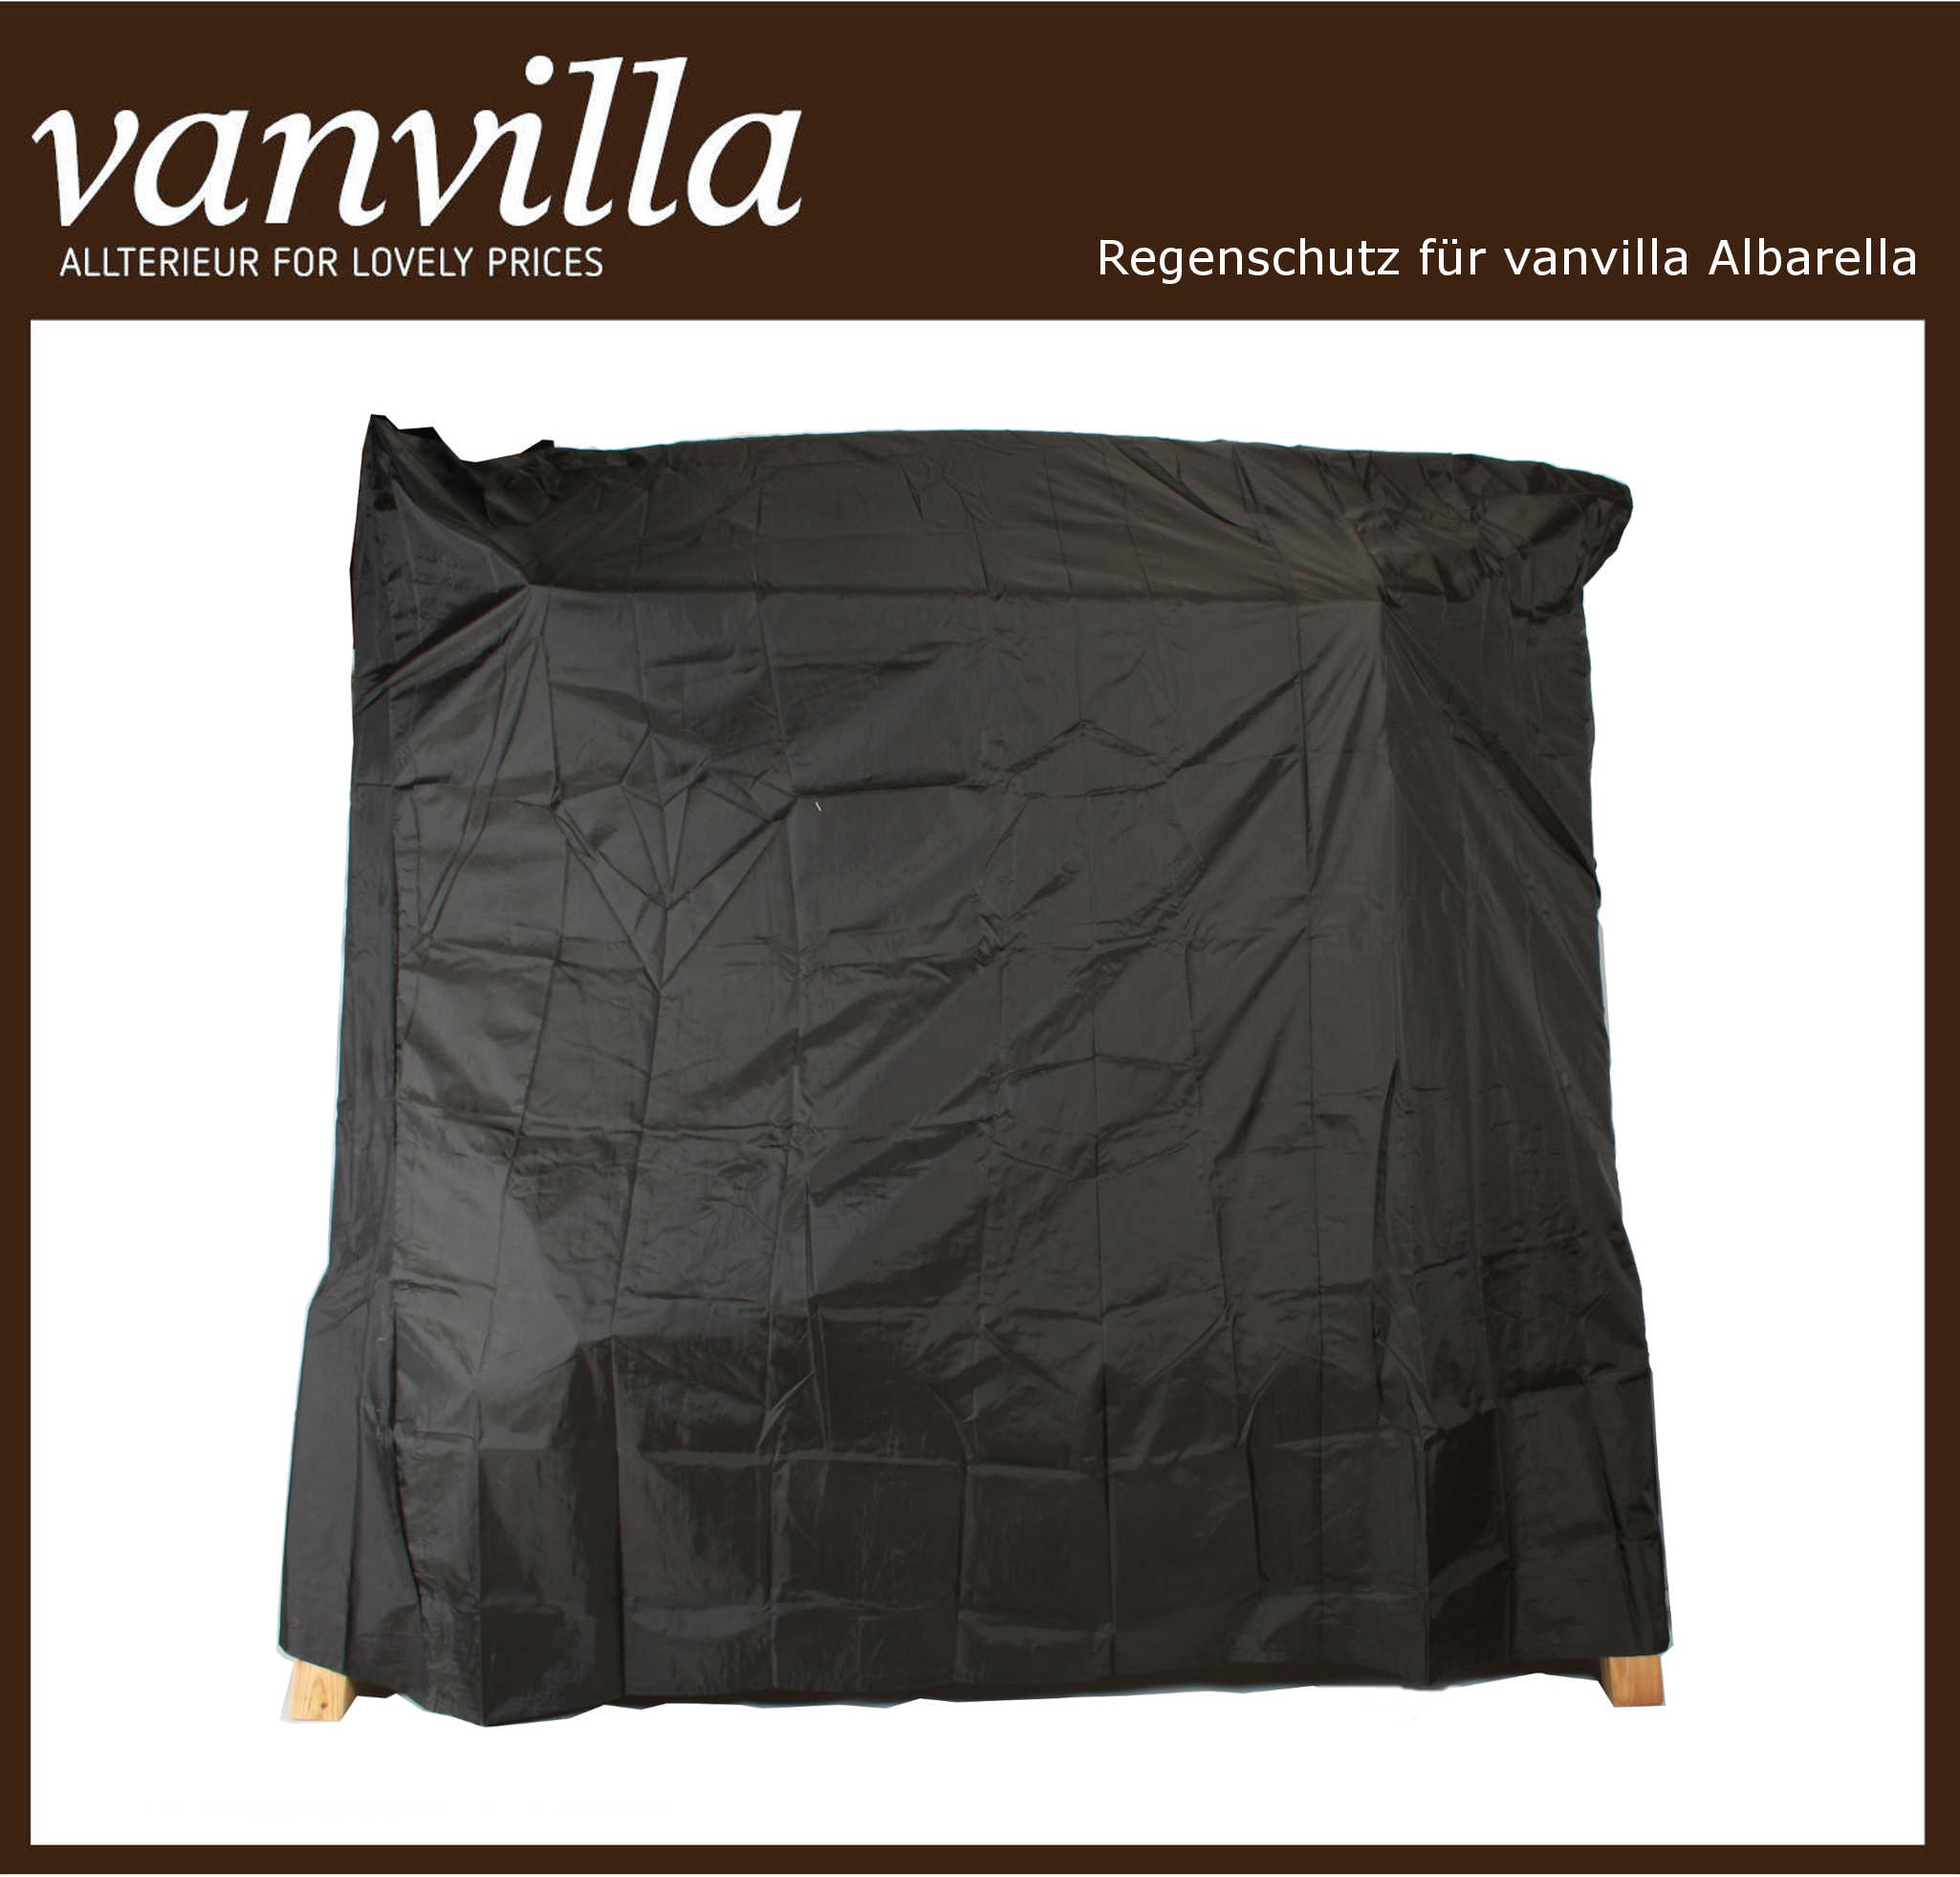 Regenschutz für vanvilla Hollywoodschaukel Albarella / Gomera